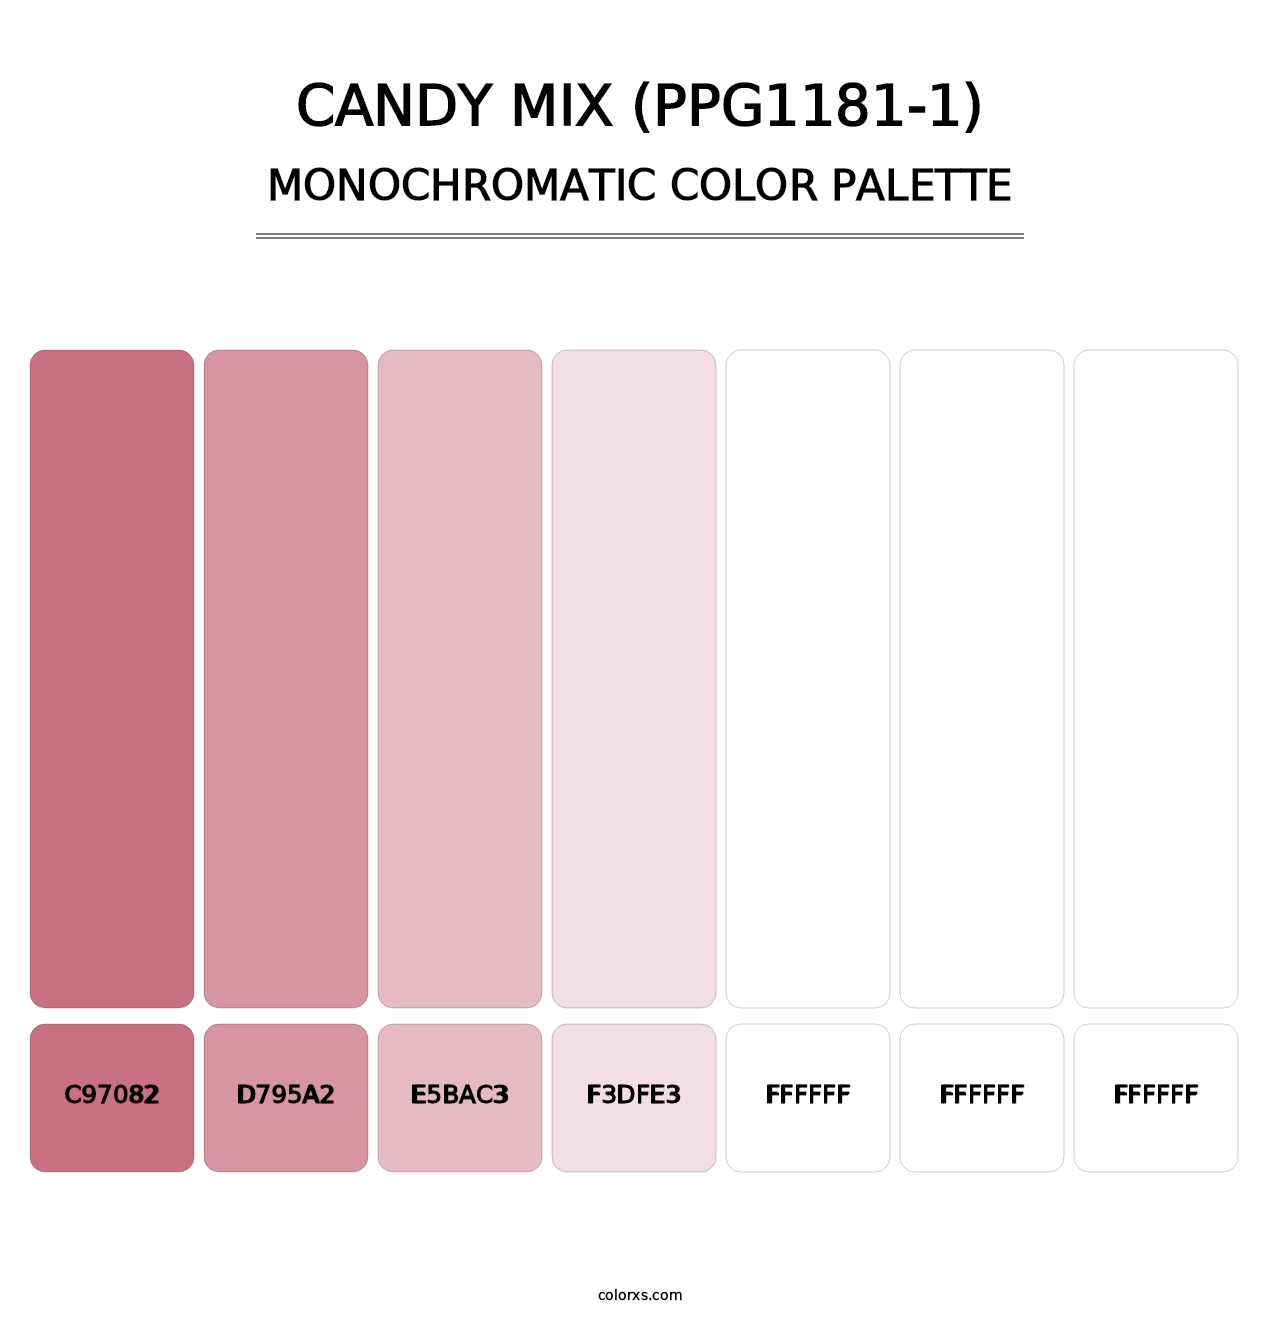 Candy Mix (PPG1181-1) - Monochromatic Color Palette